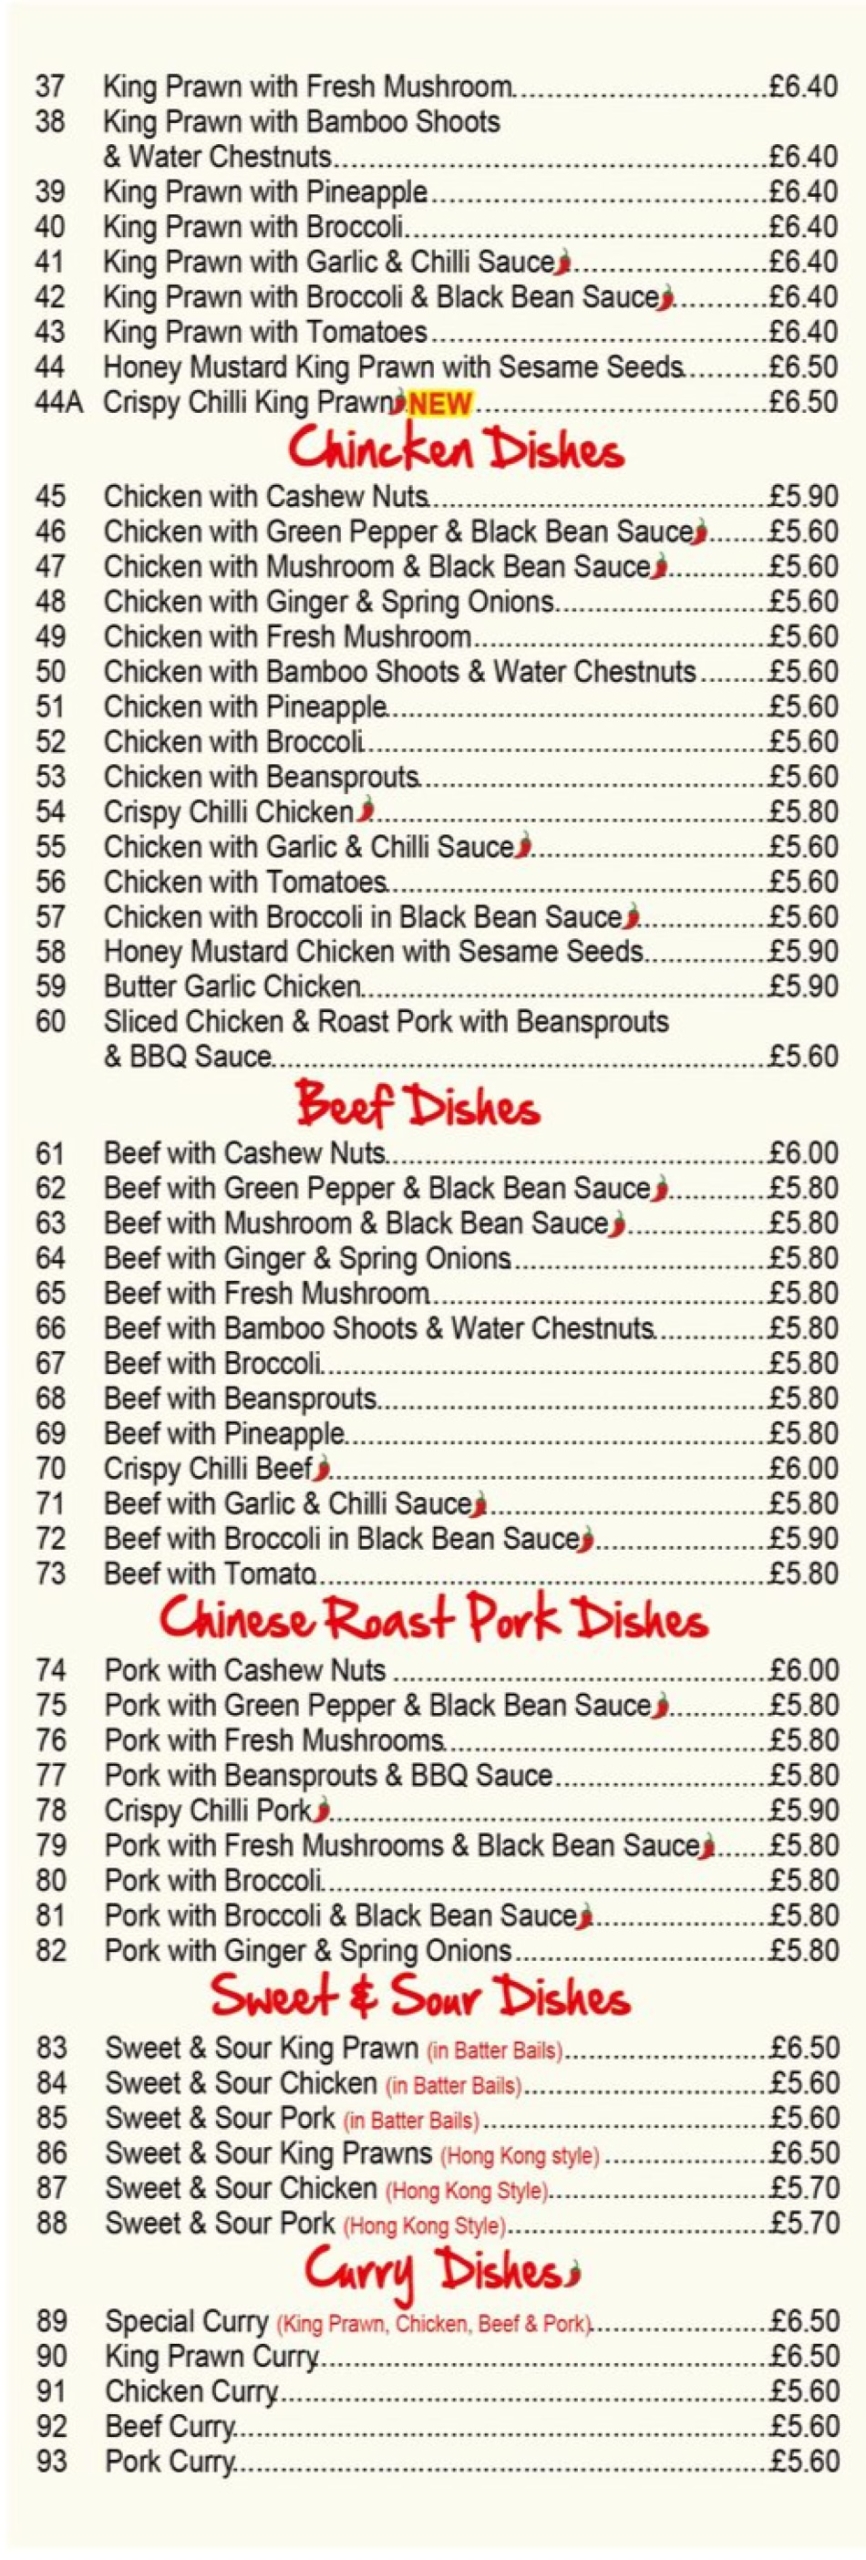 Takeaway Restaurant Menu Page - Royal china Chinese takeaway - Plymouth